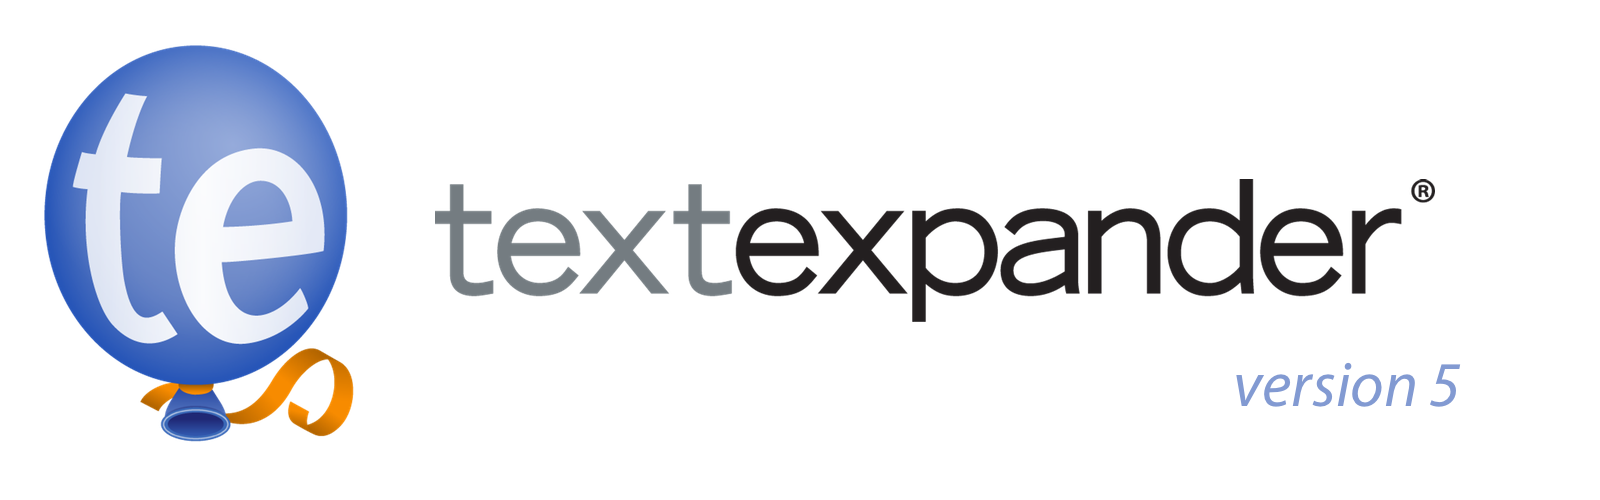 export textexpander snippets